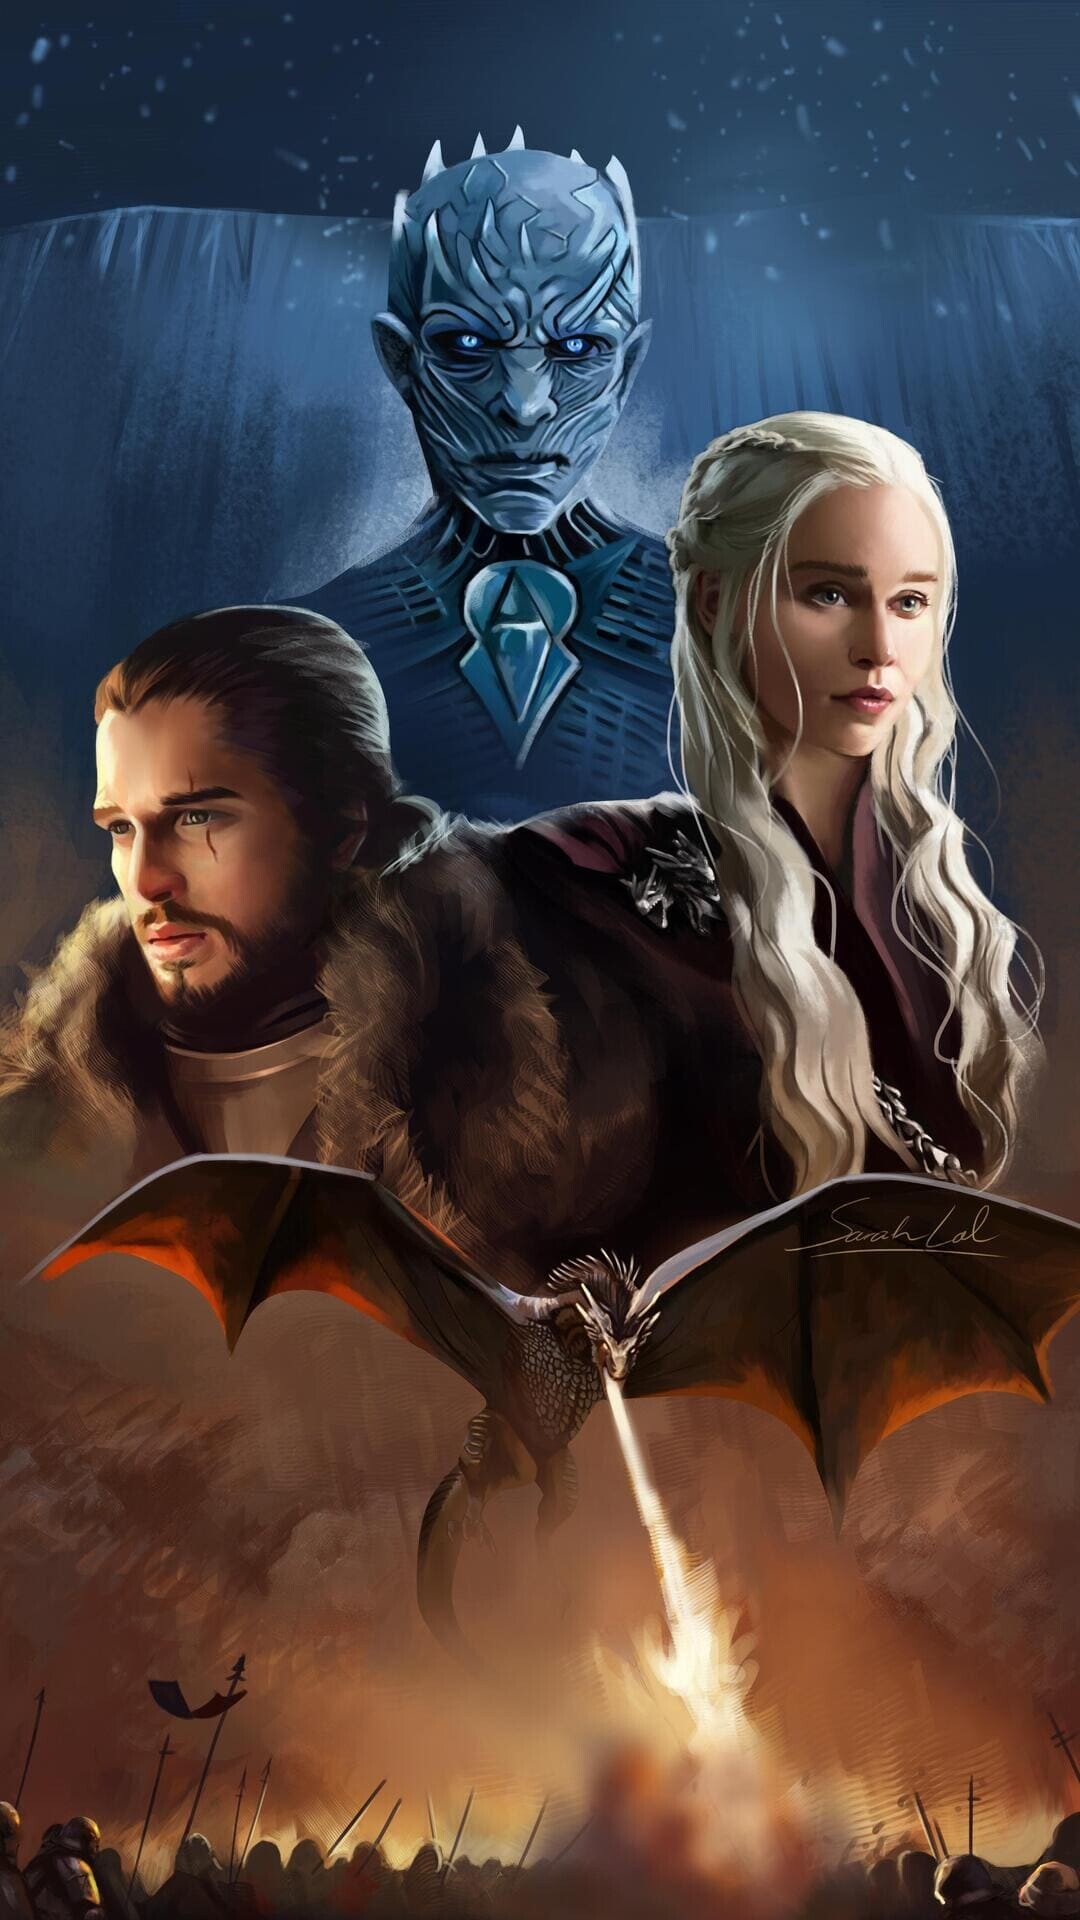 Game of Thrones: Daenerys Targaryen, Jon Snow, Night King, Drogon. 1080x1920 Full HD Wallpaper.